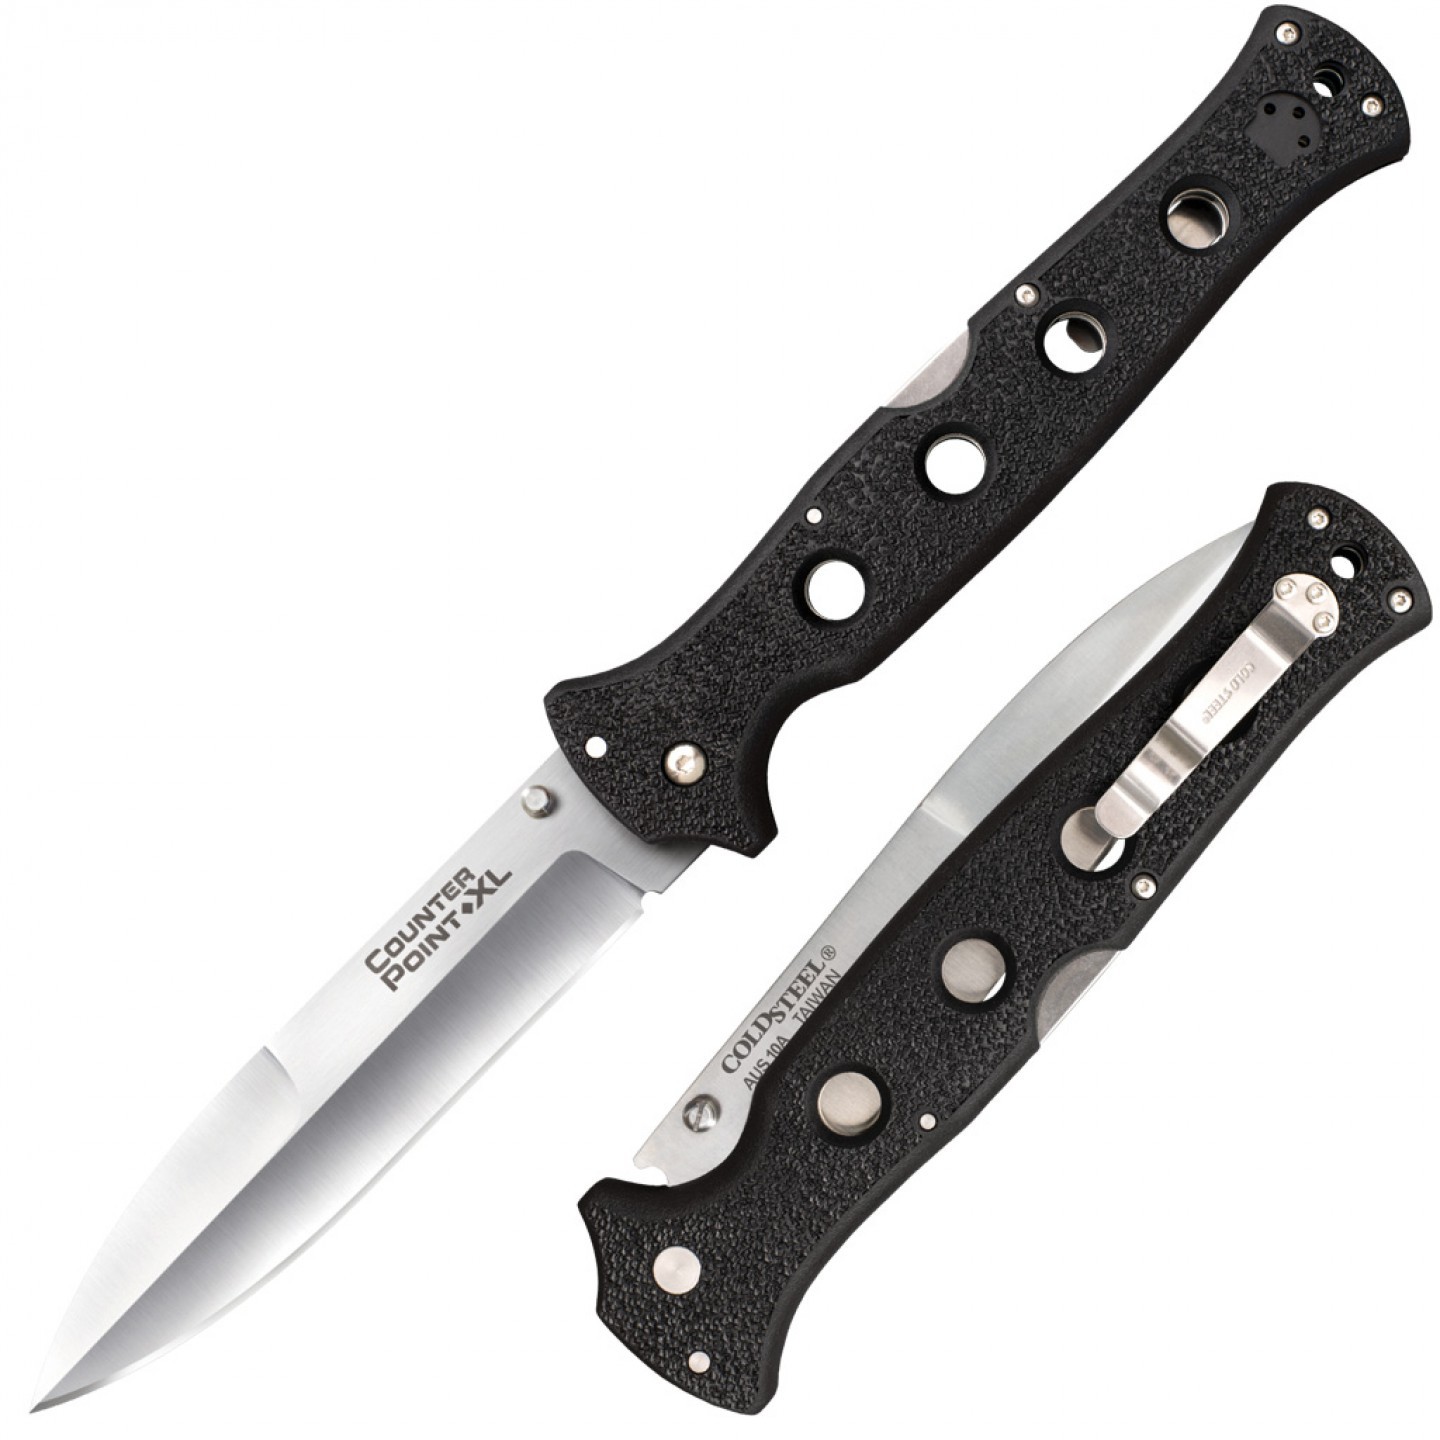 Нож складной Cold Steel Counter Point XL, сталь AUS-10A, рукоять grivory, black складной нож buck slim pro trx сталь s30v рукоять g10